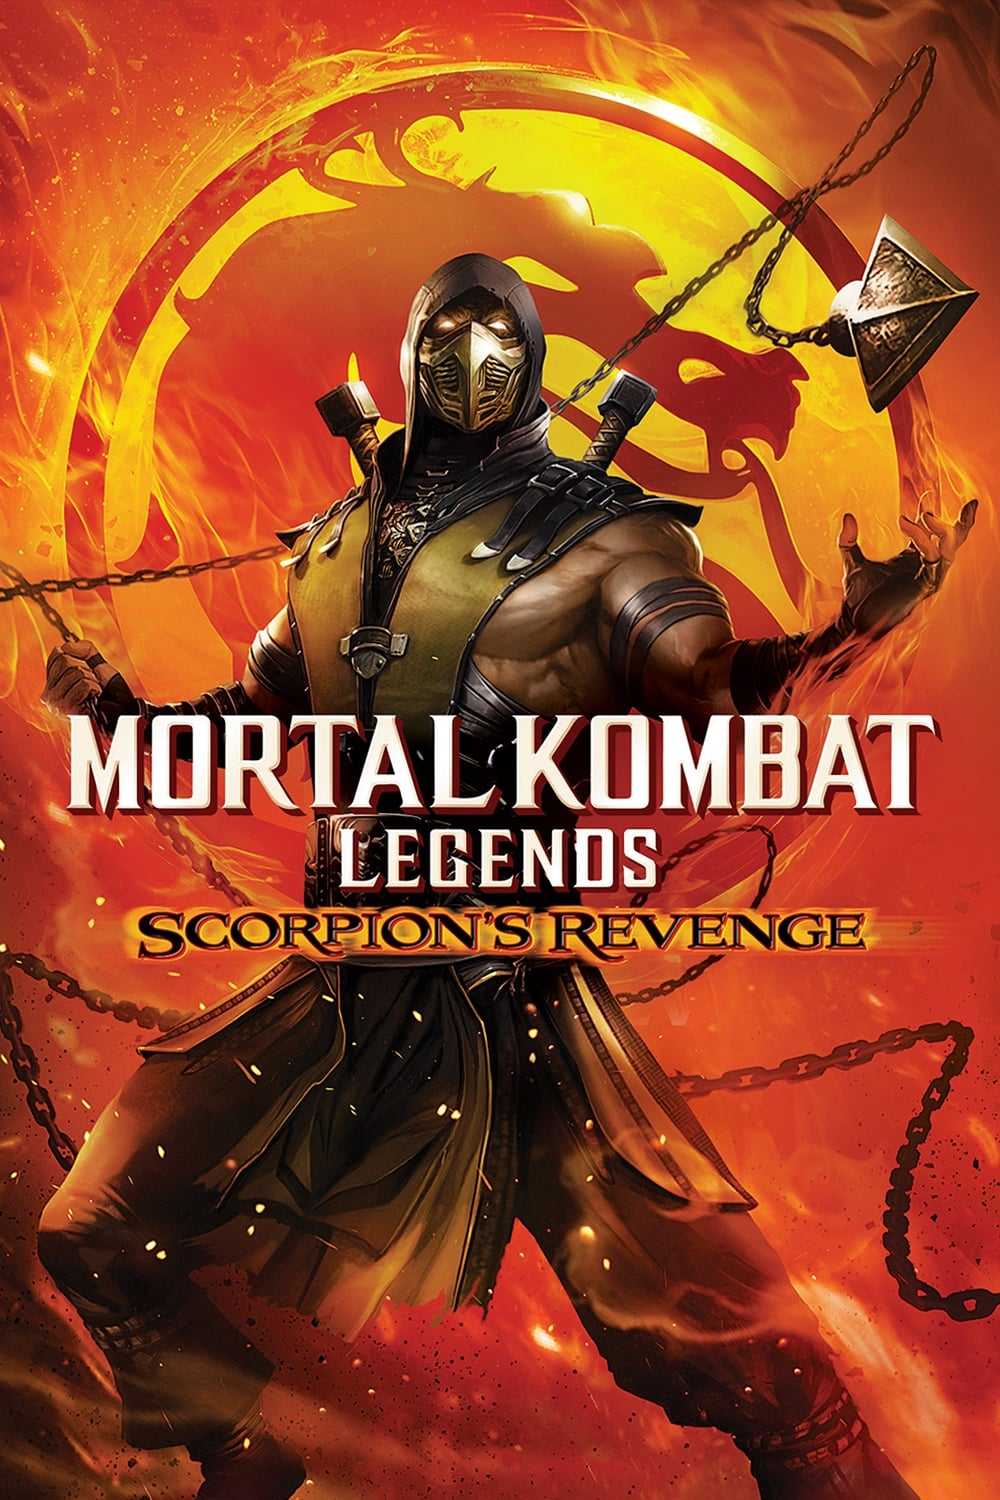 Mortal Kombat Legends: Scorpion's Revenge [Sub-Ita] in streaming